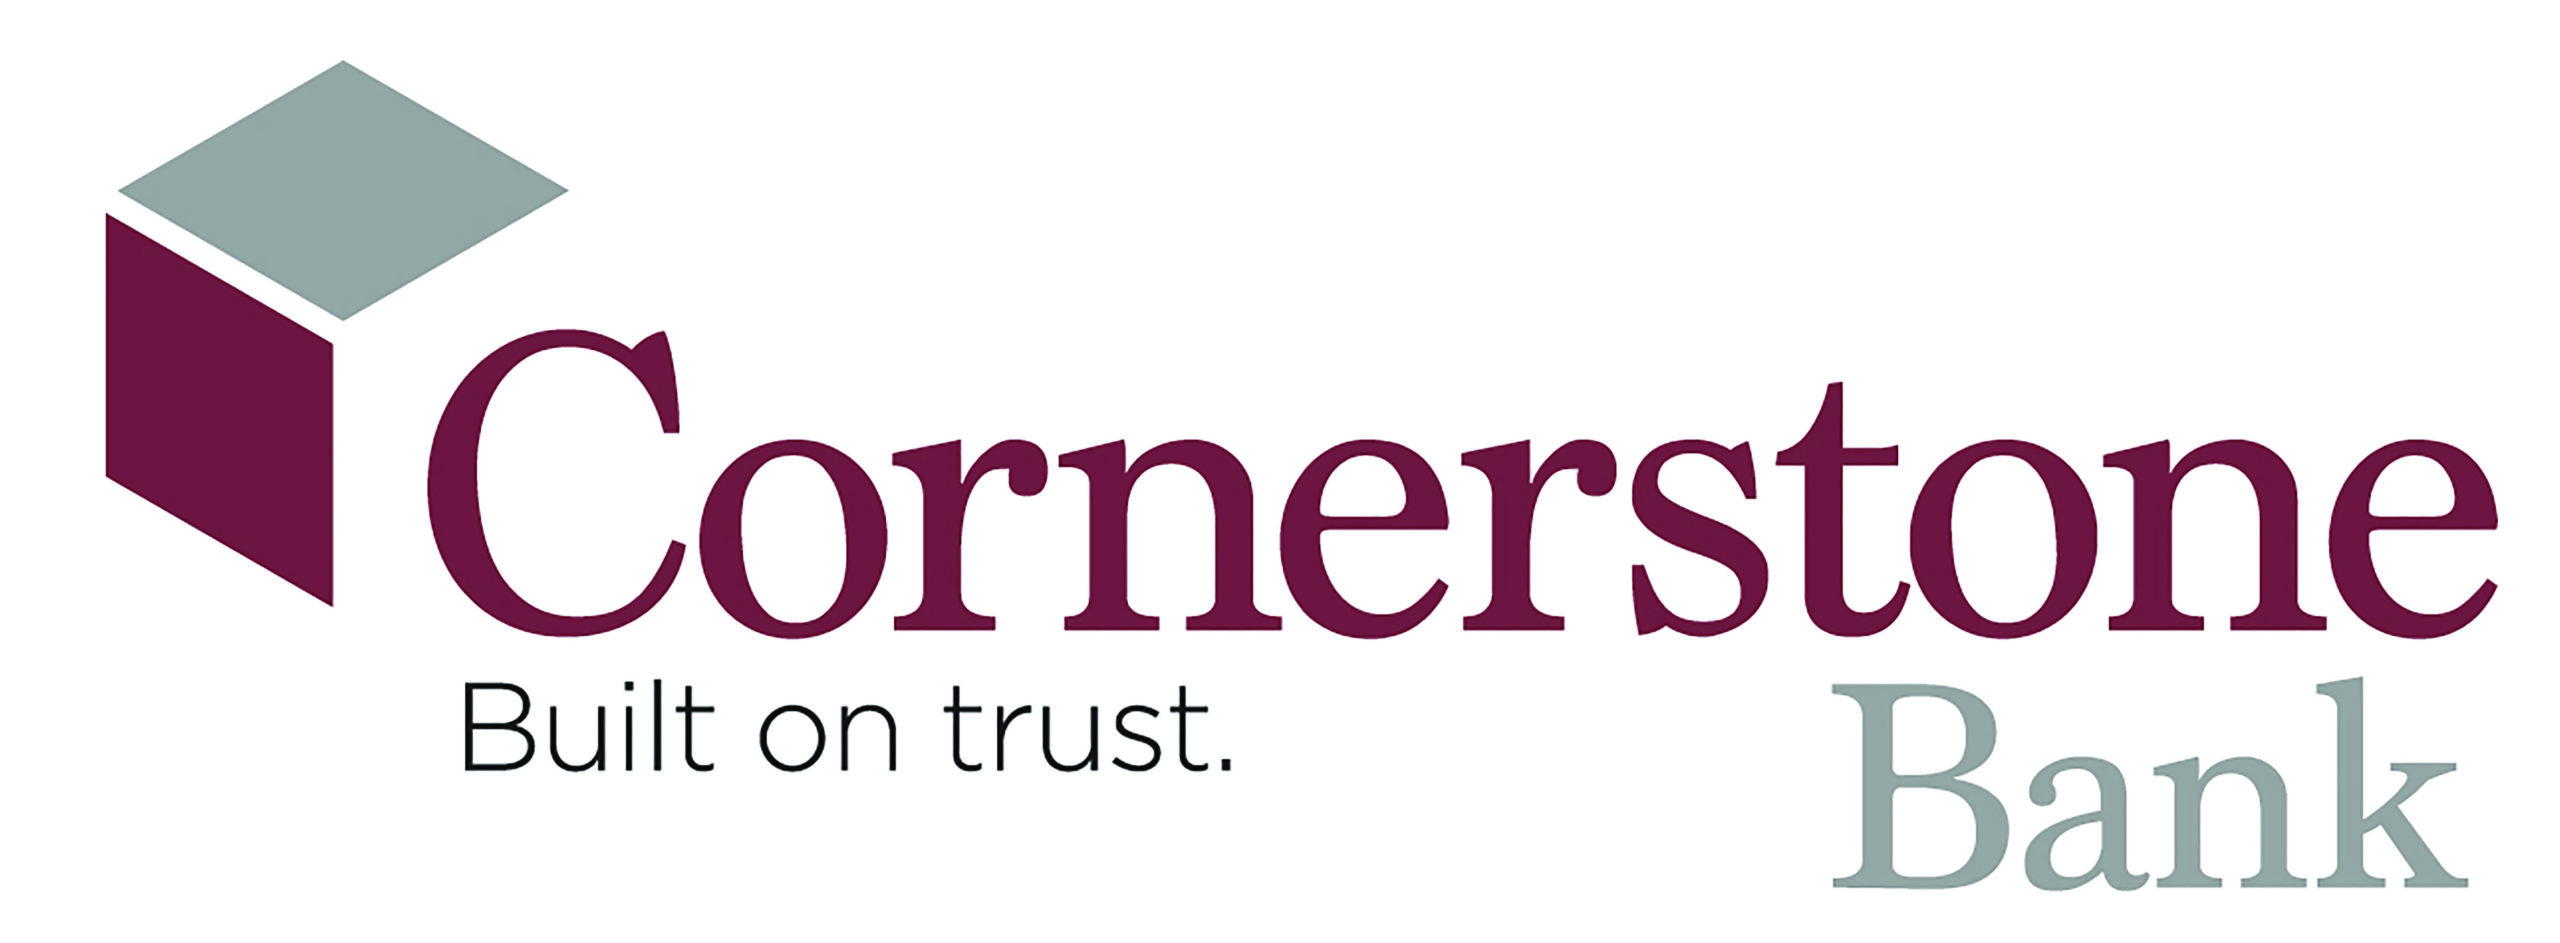 Cornerstone Bank - build on trust